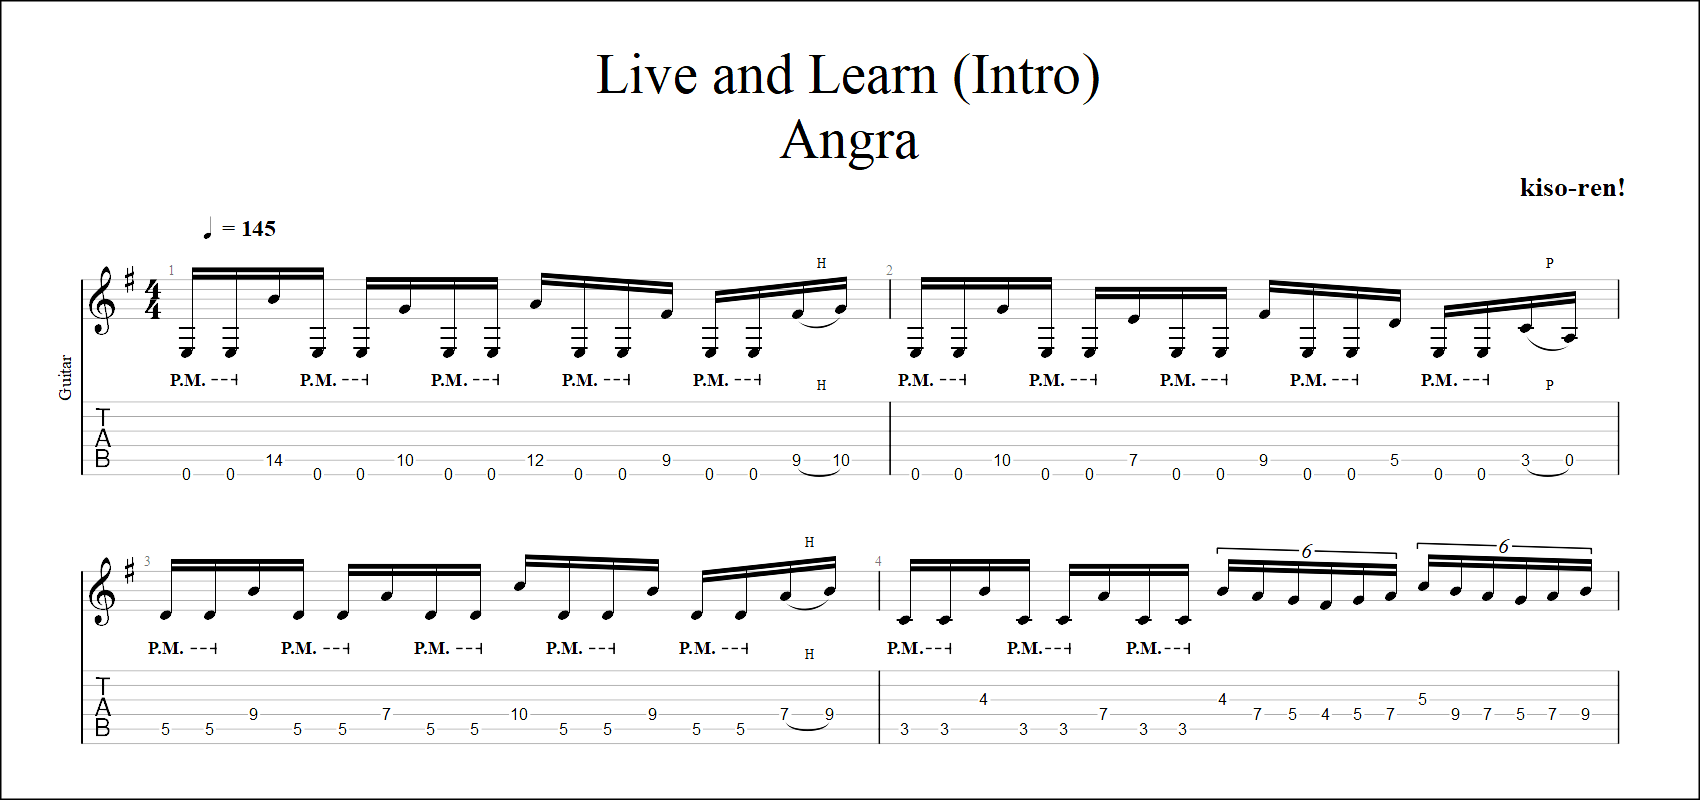 TAB Live and Learn / ANGRA INTRO Guitar Practice アングラ リブアンドラーン イントロギター練習 Kiko Loureiro【Guitar Picking Vol.48】